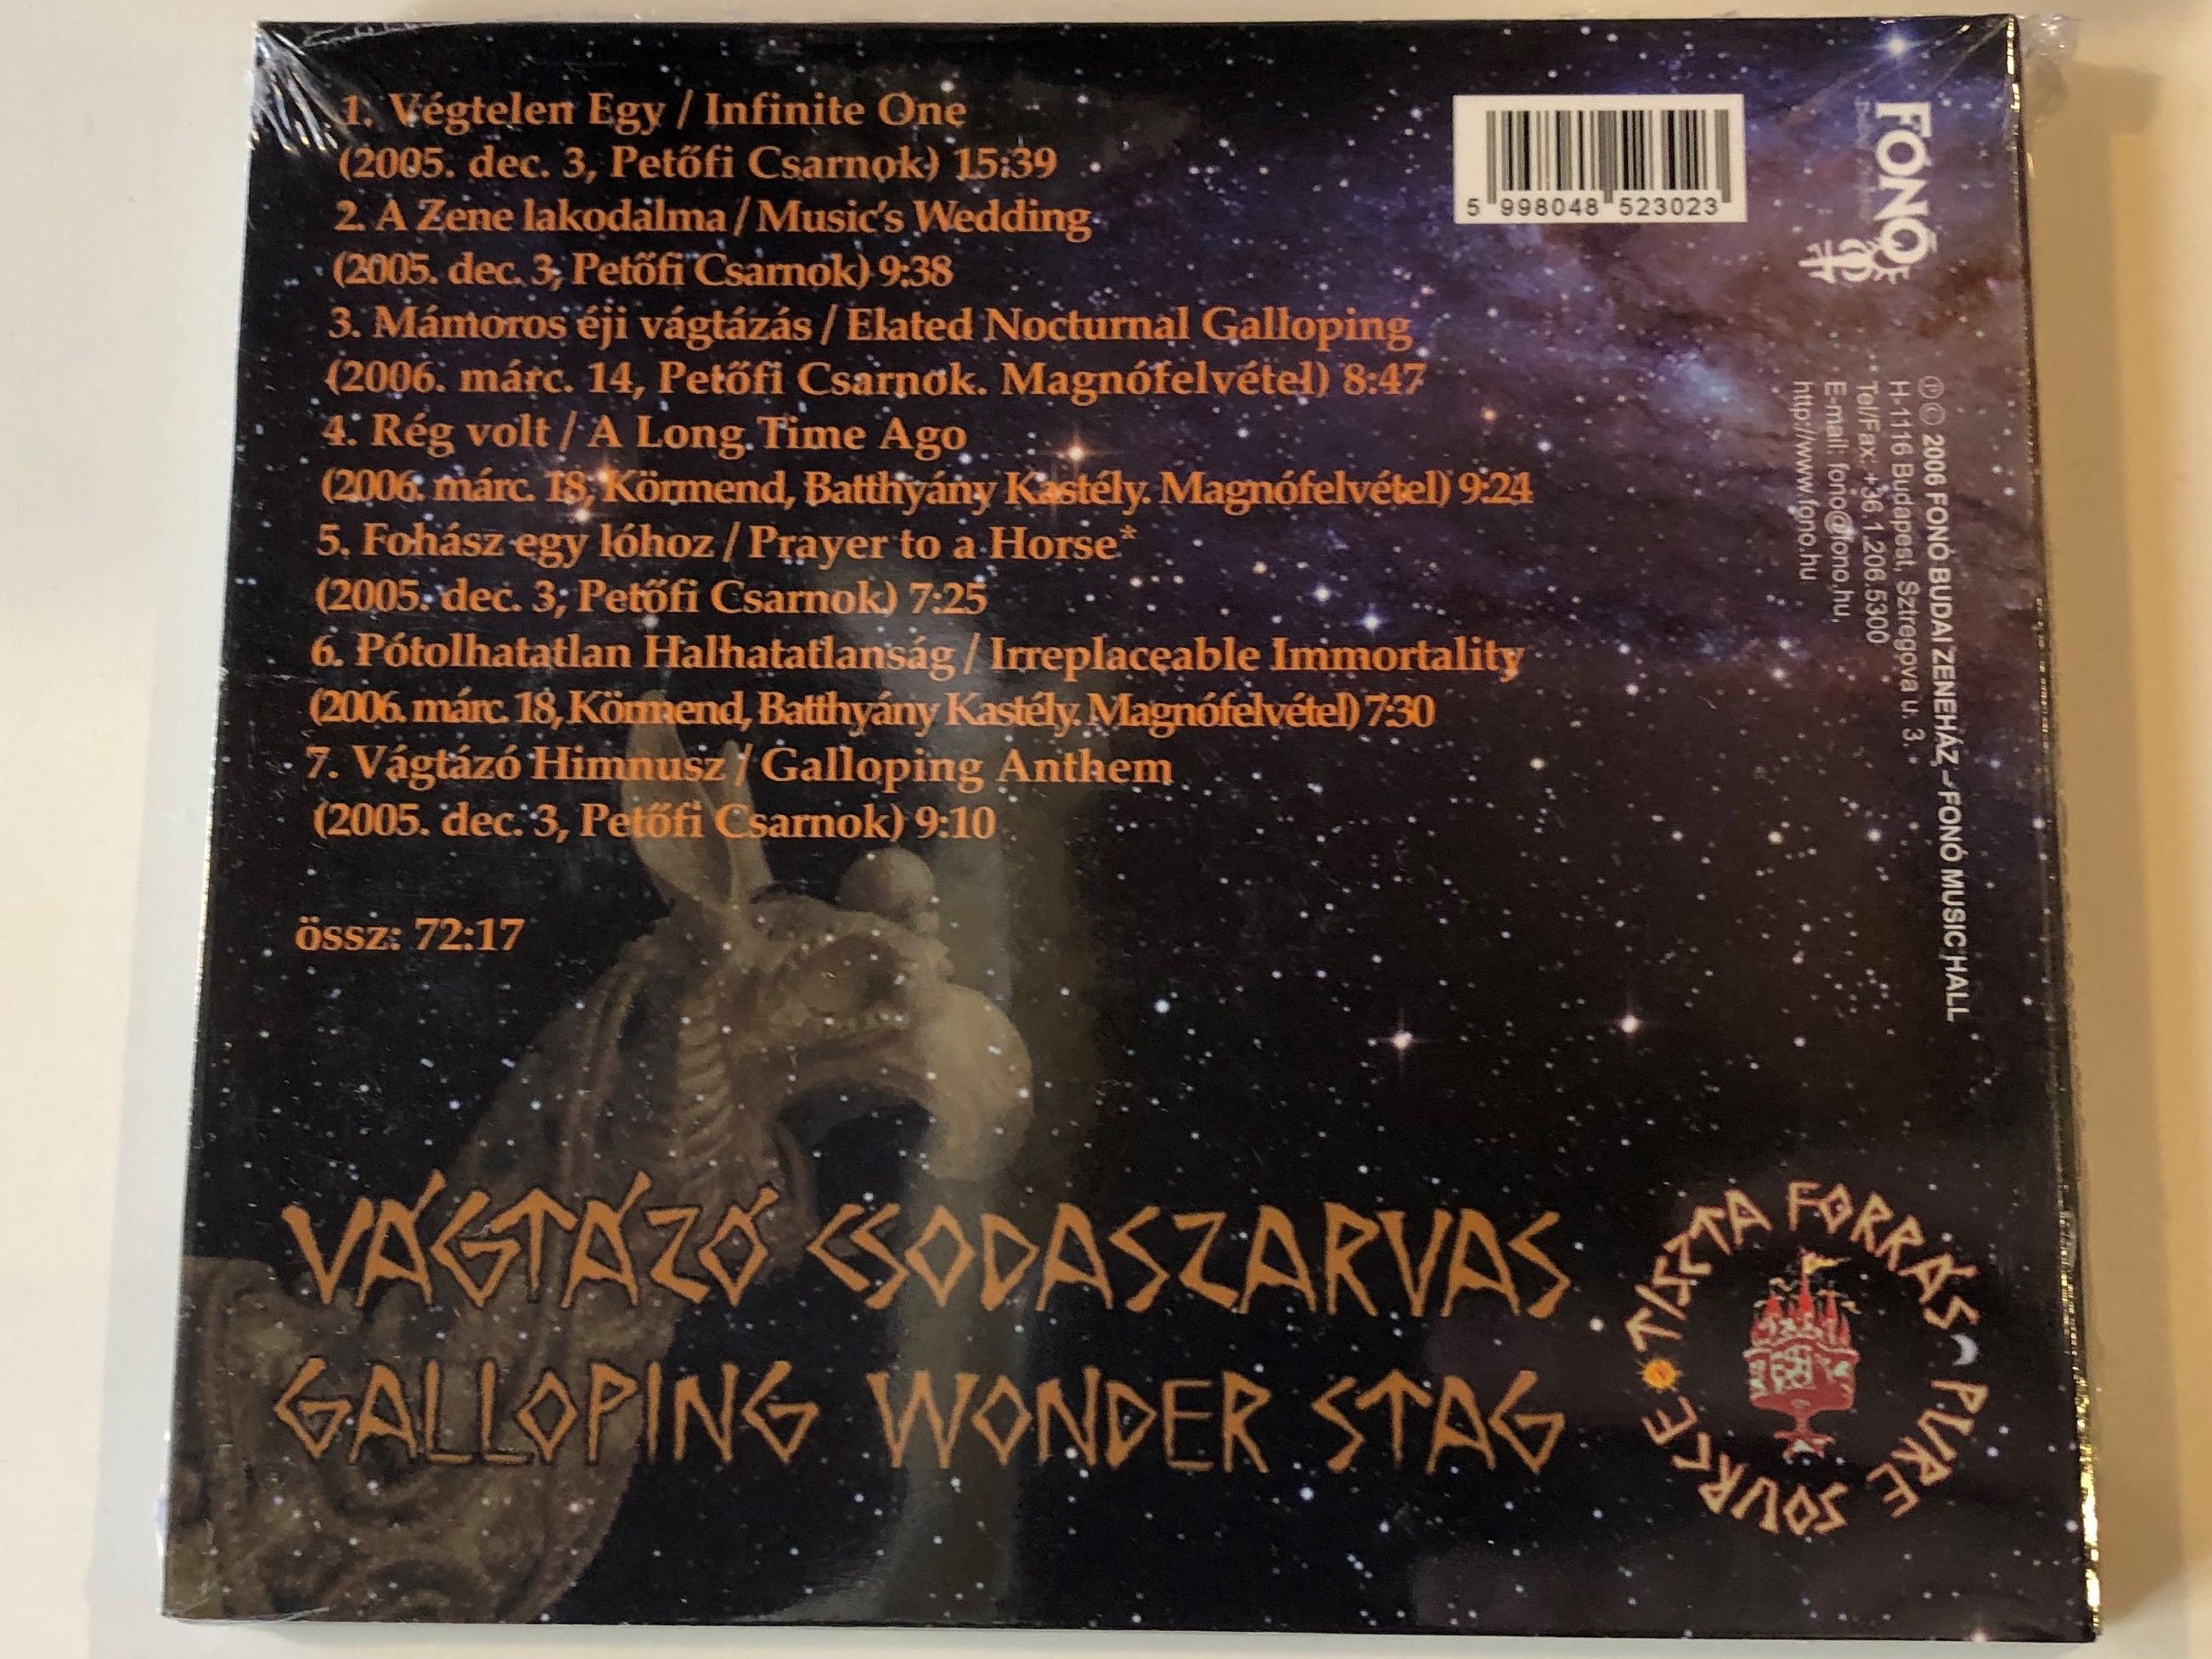 v-gt-z-csodaszarvas-tiszta-forr-s-pure-source-galloping-wonder-stag-fon-records-audio-cd-2006-5998048523023-2-.jpg